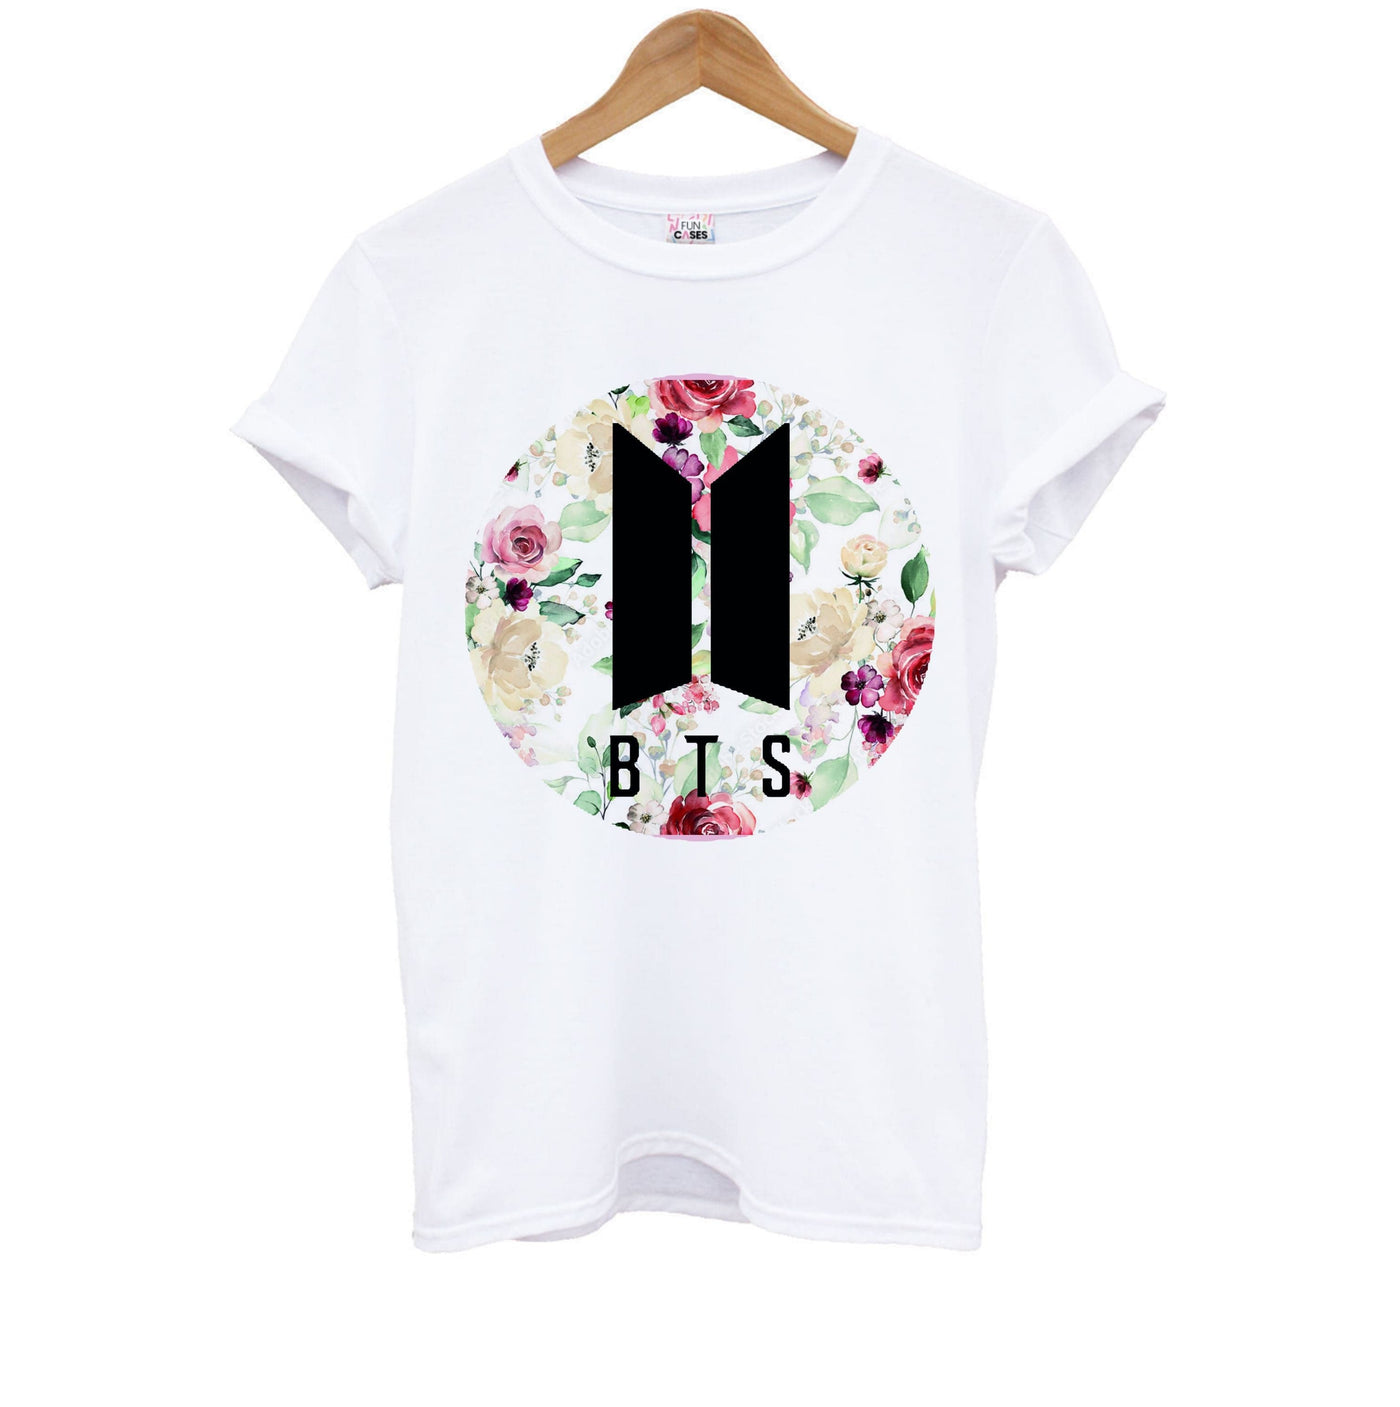 BTS Logo And Flowers - BTS Kids T-Shirt